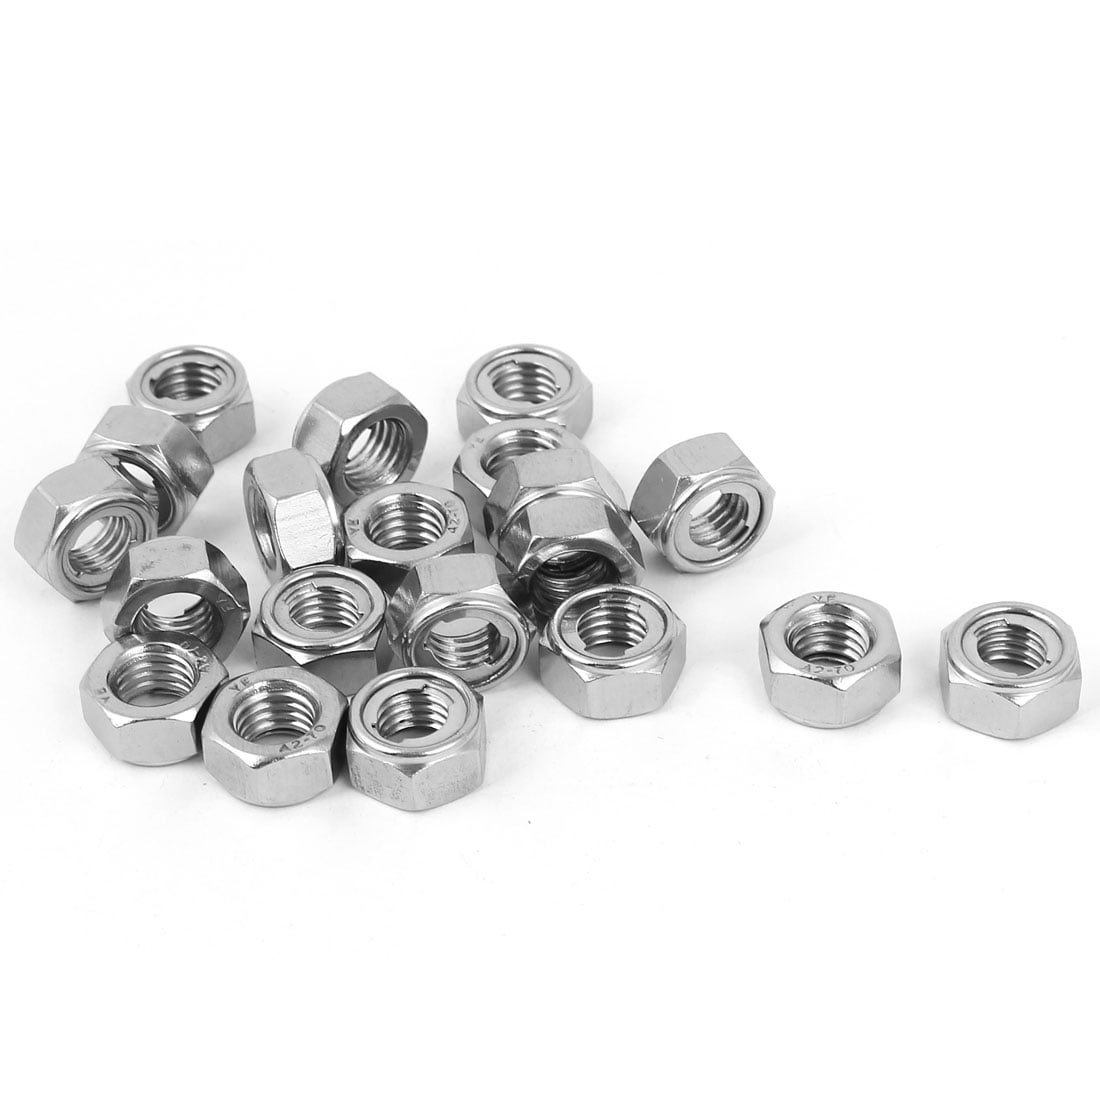 10-24 304 Stainless Steel Female Thread Kep Hexagon Head Nut 100pcs